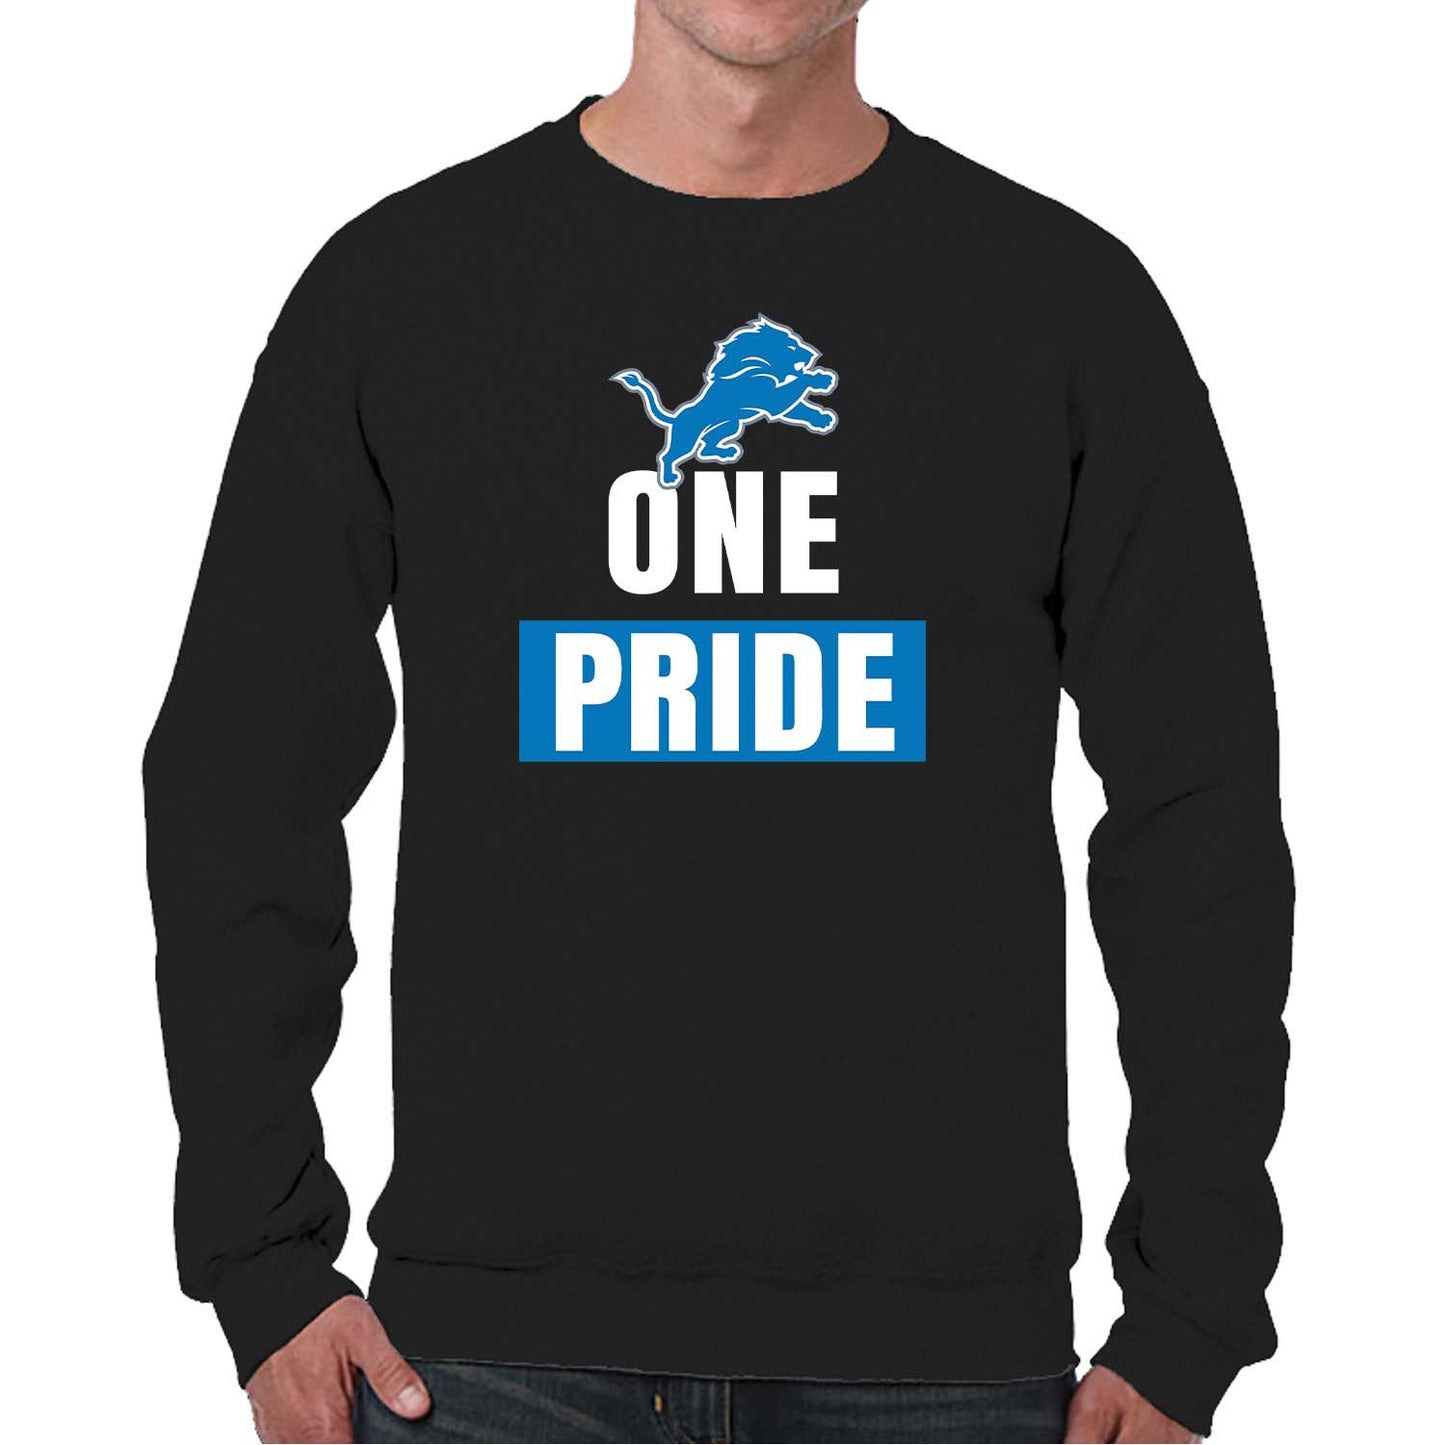 Detroit Lions NFL Adult Slogan Crewneck Sweatshirt - Black